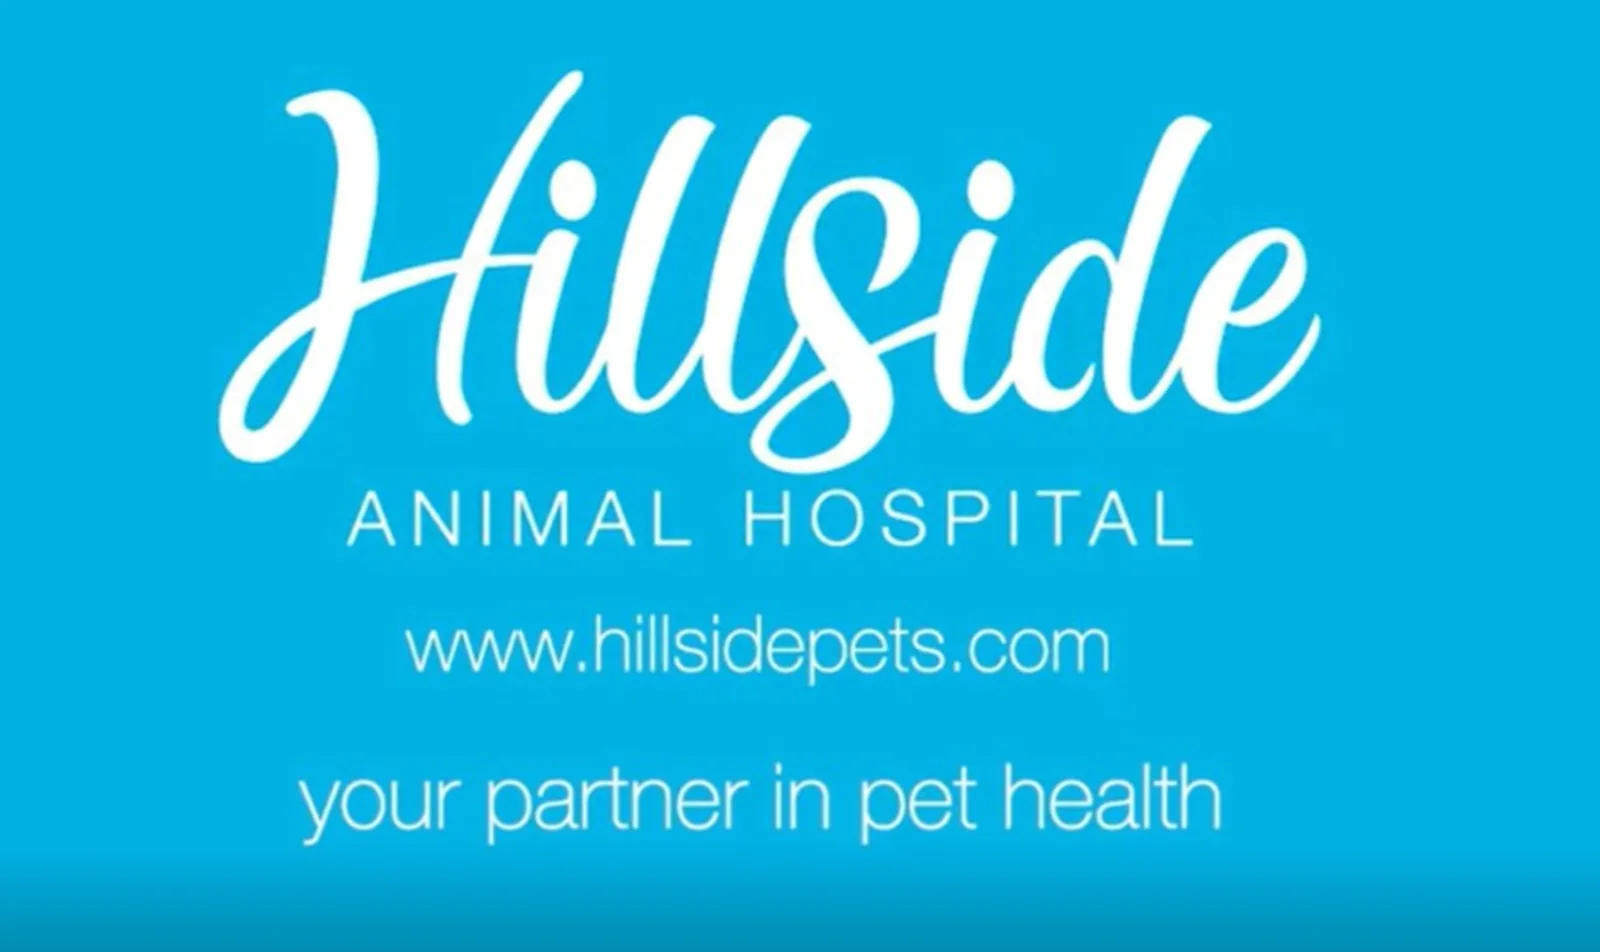 Hillside Animal Hospital. Your partner in pet health. 